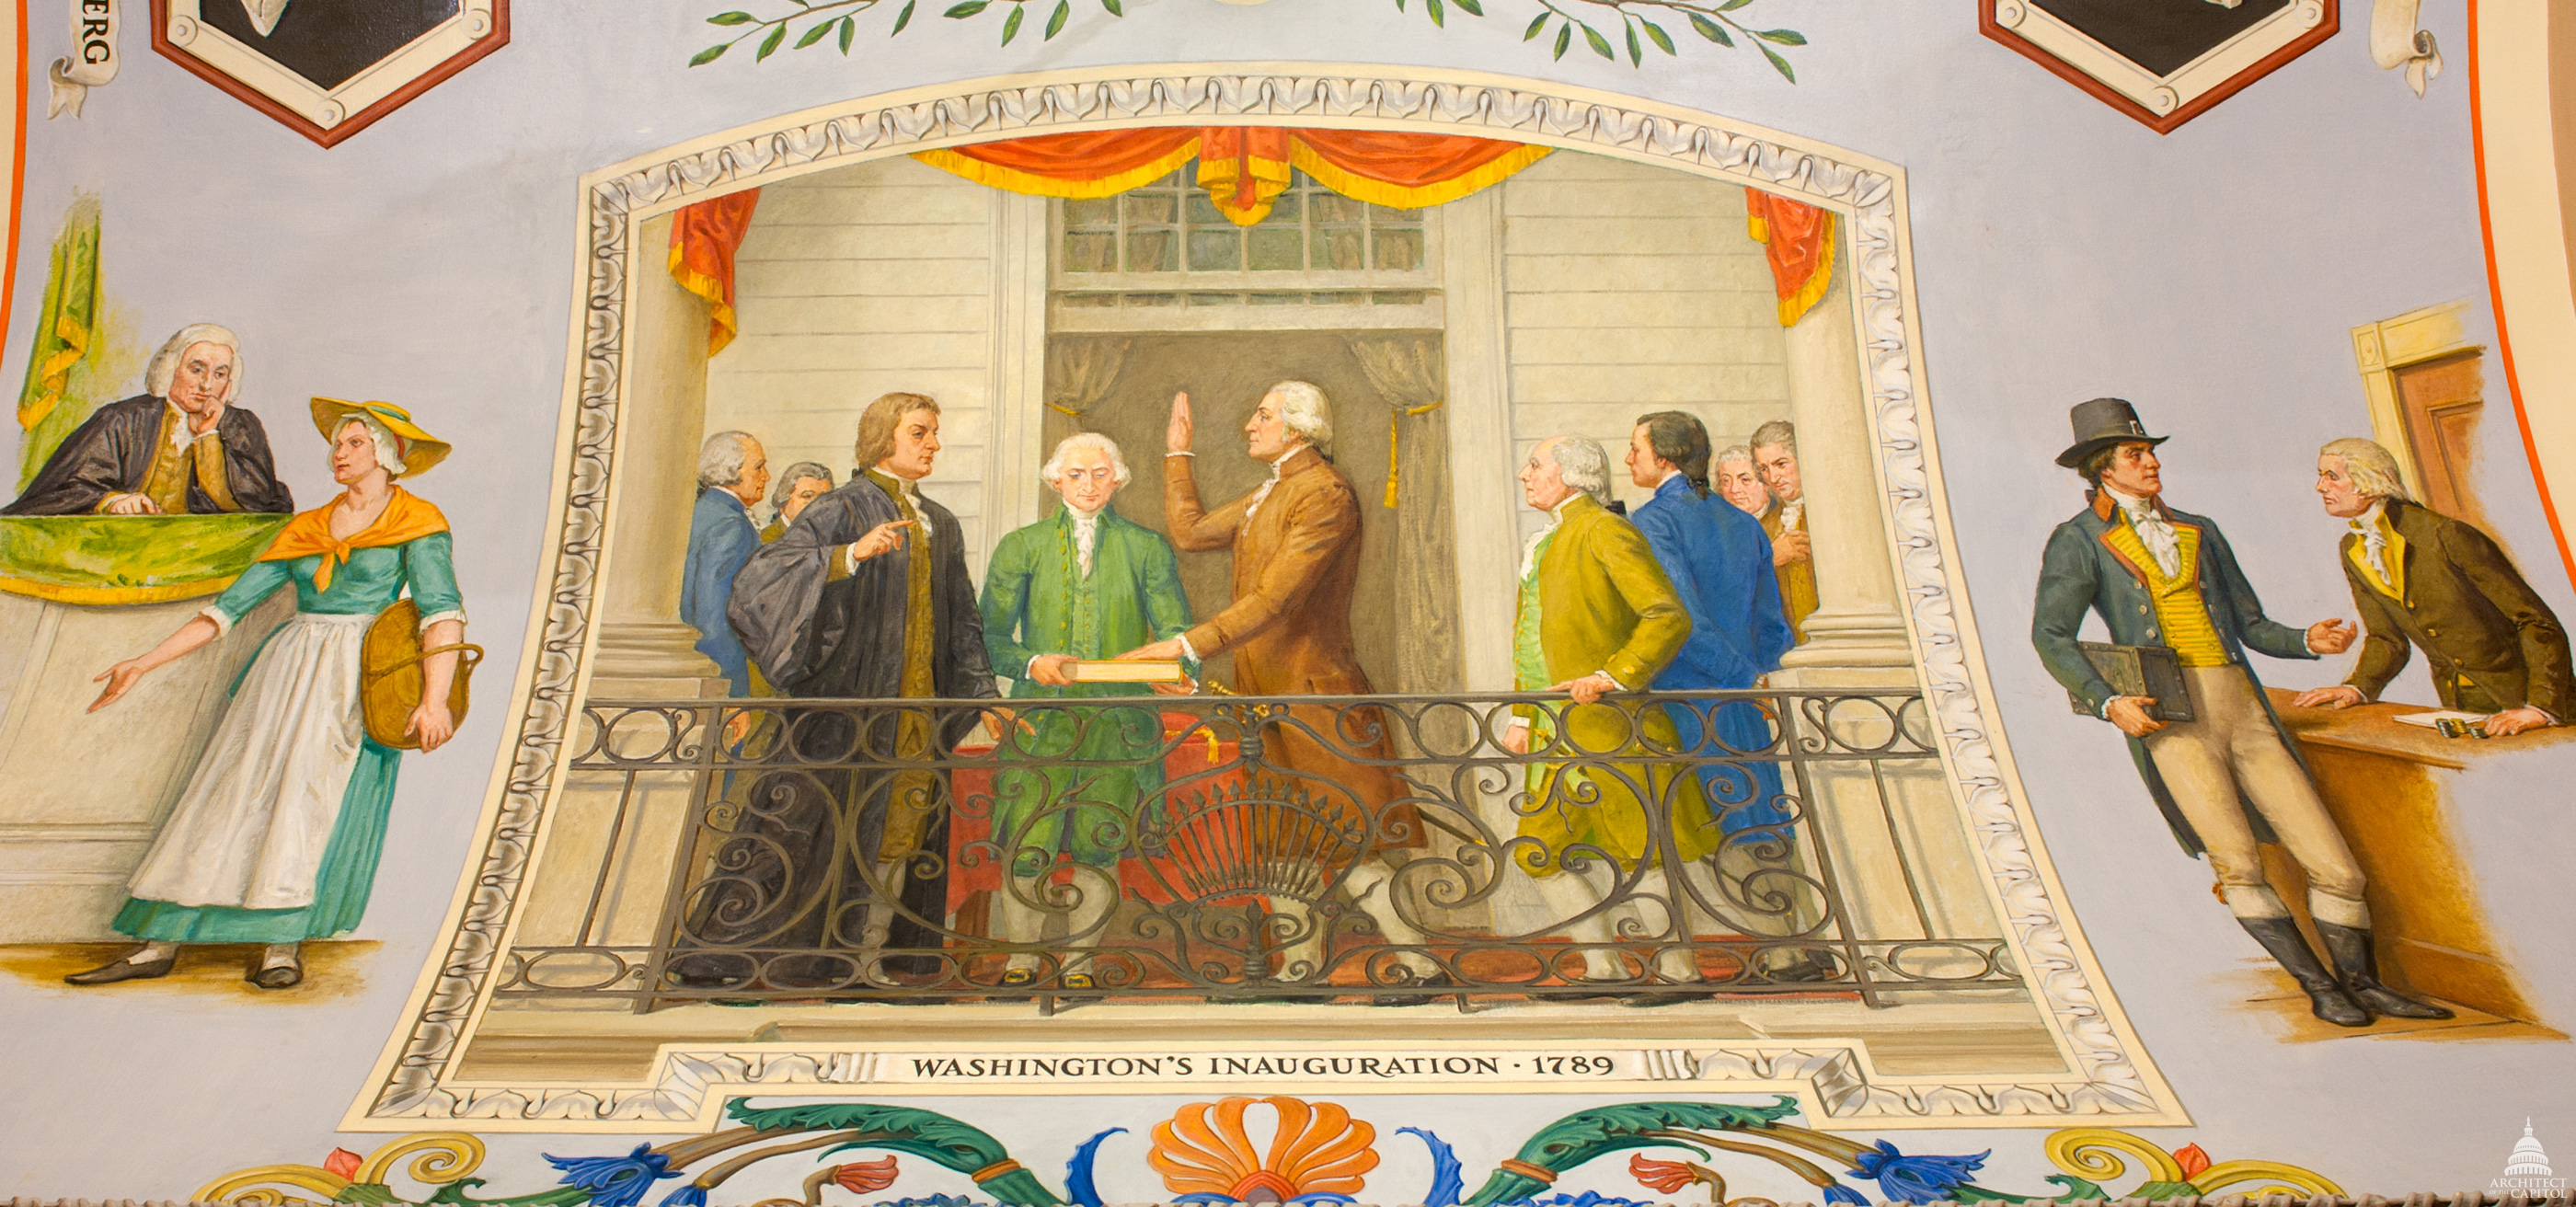 Cox Corridors mural in the U.S. Capitol depicting Washington's Inauguration, 1789.